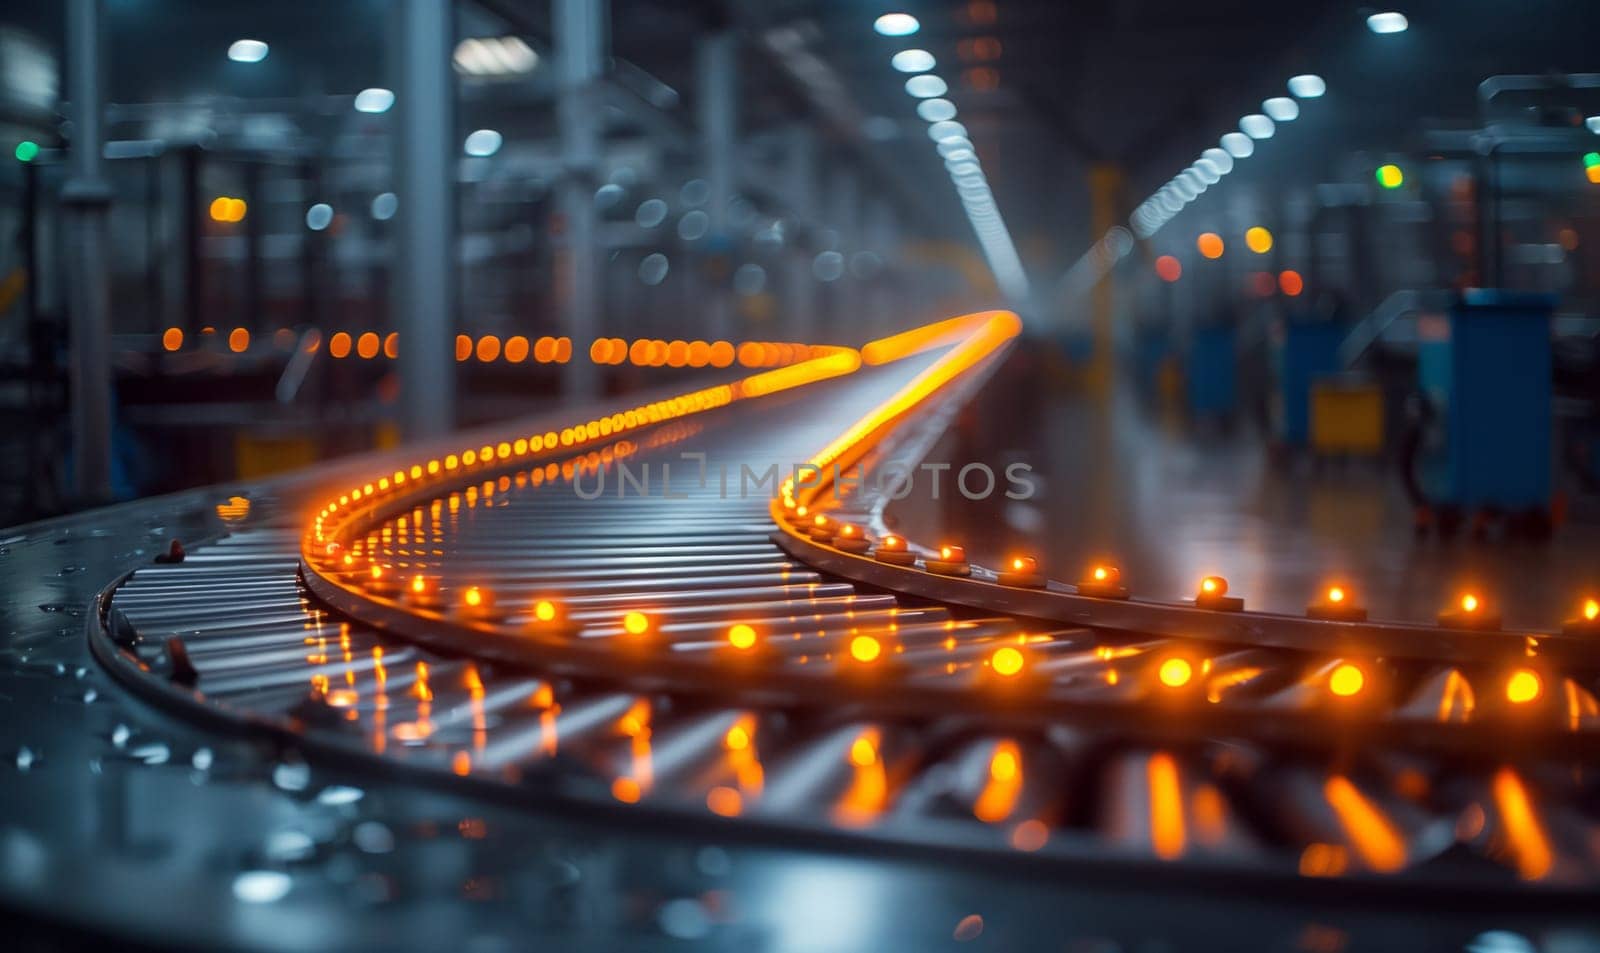 Automotive lighting on conveyor belt in urban factory with orange lights by richwolf